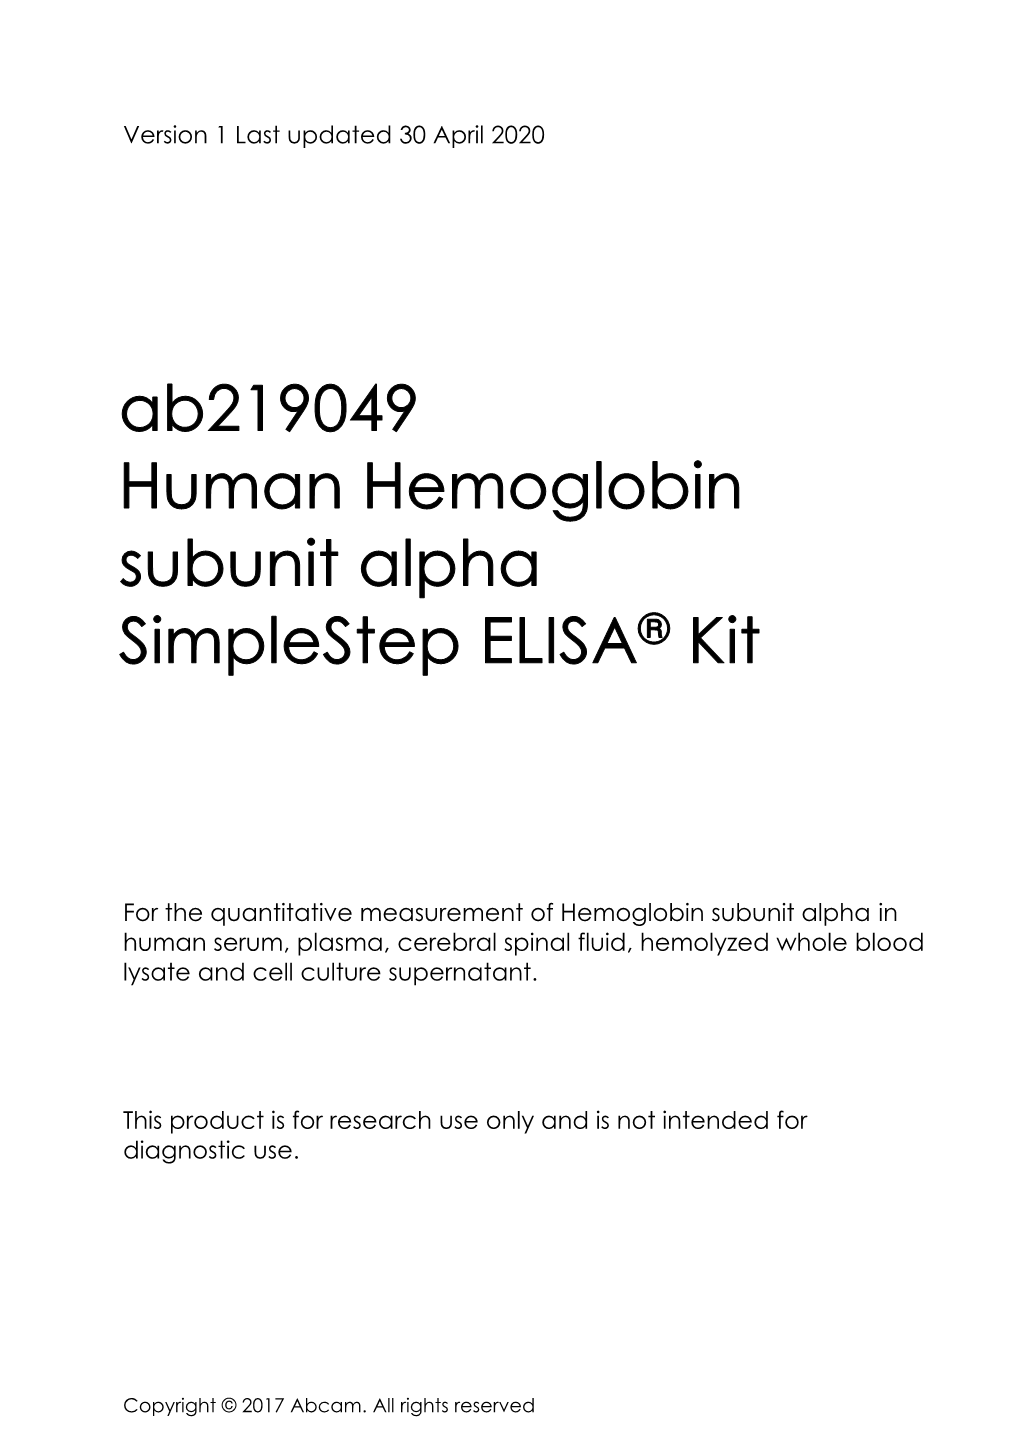 Ab219049 Human Hemoglobin Subunit Alpha Simplestep ELISA® Kit